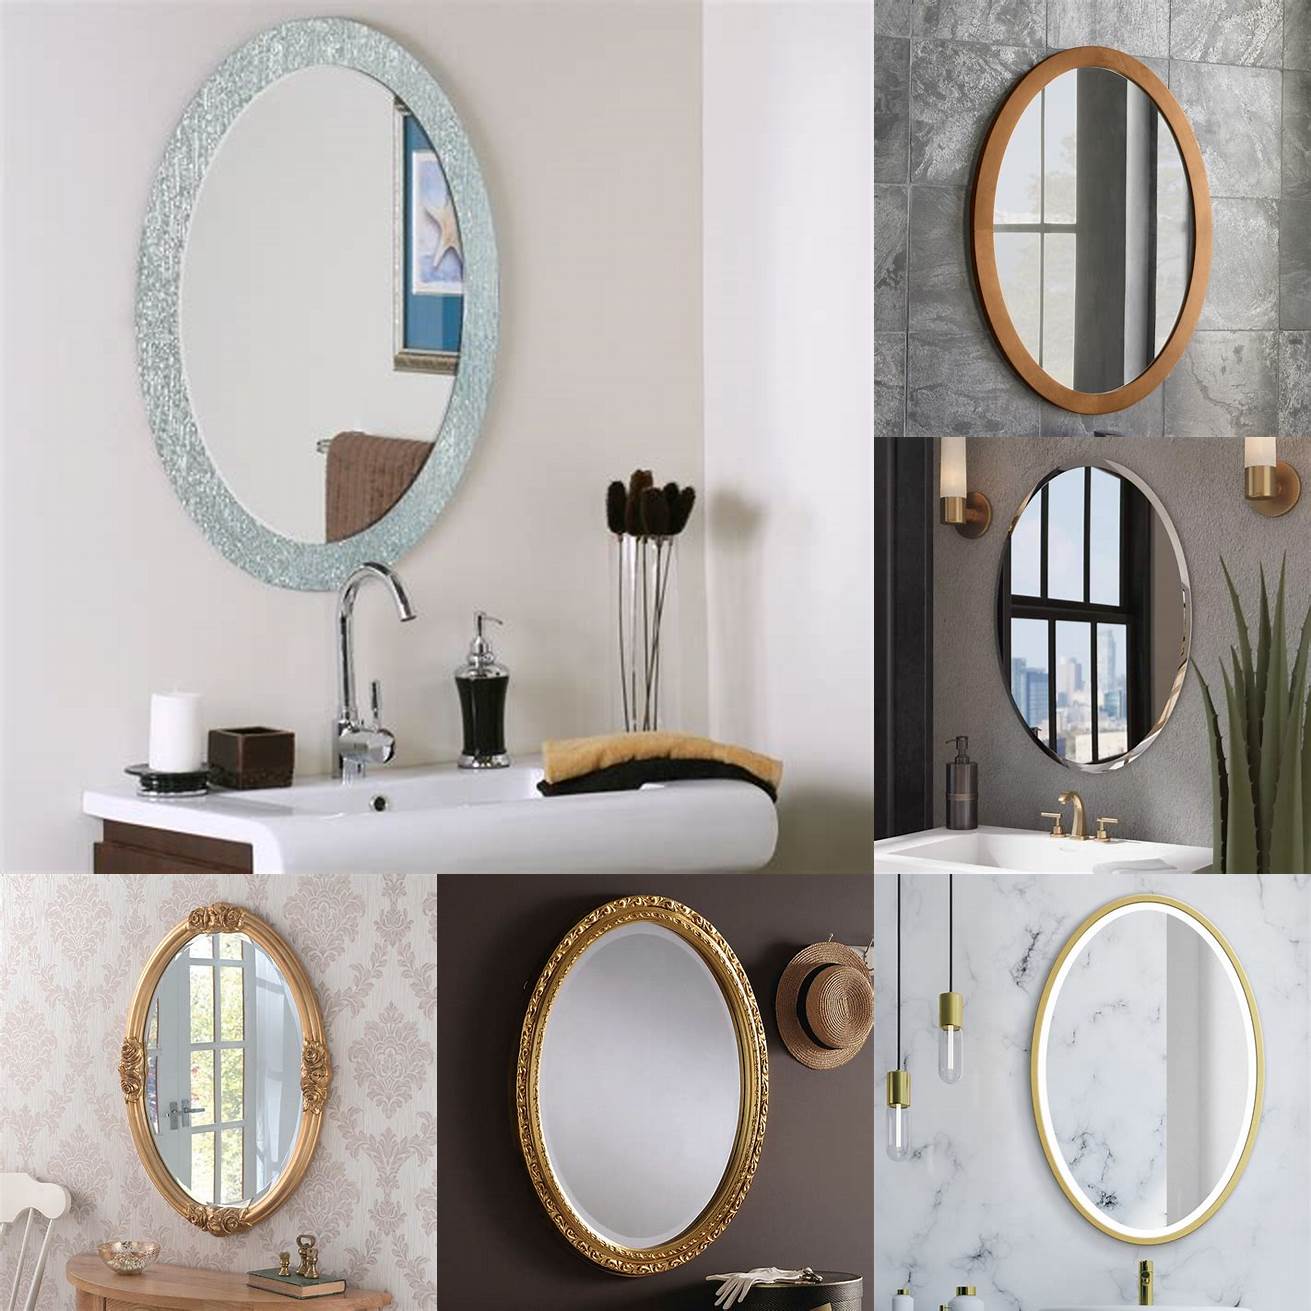 Oval framed bathroom mirror with gold frame